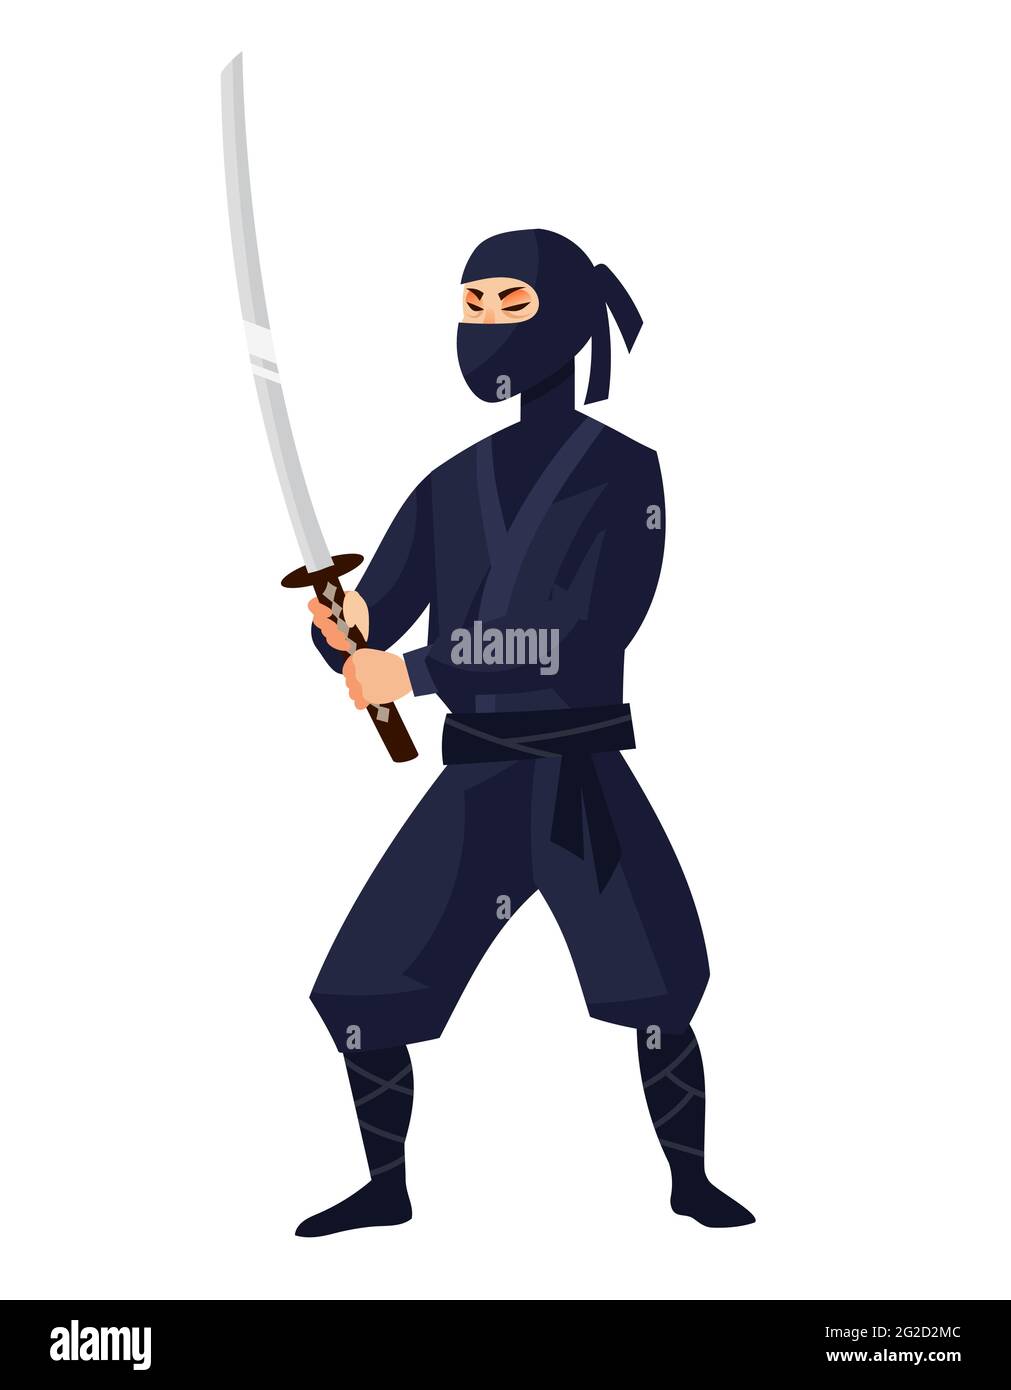 Ninja Cartoon Images – Browse 25,882 Stock Photos, Vectors, and Video